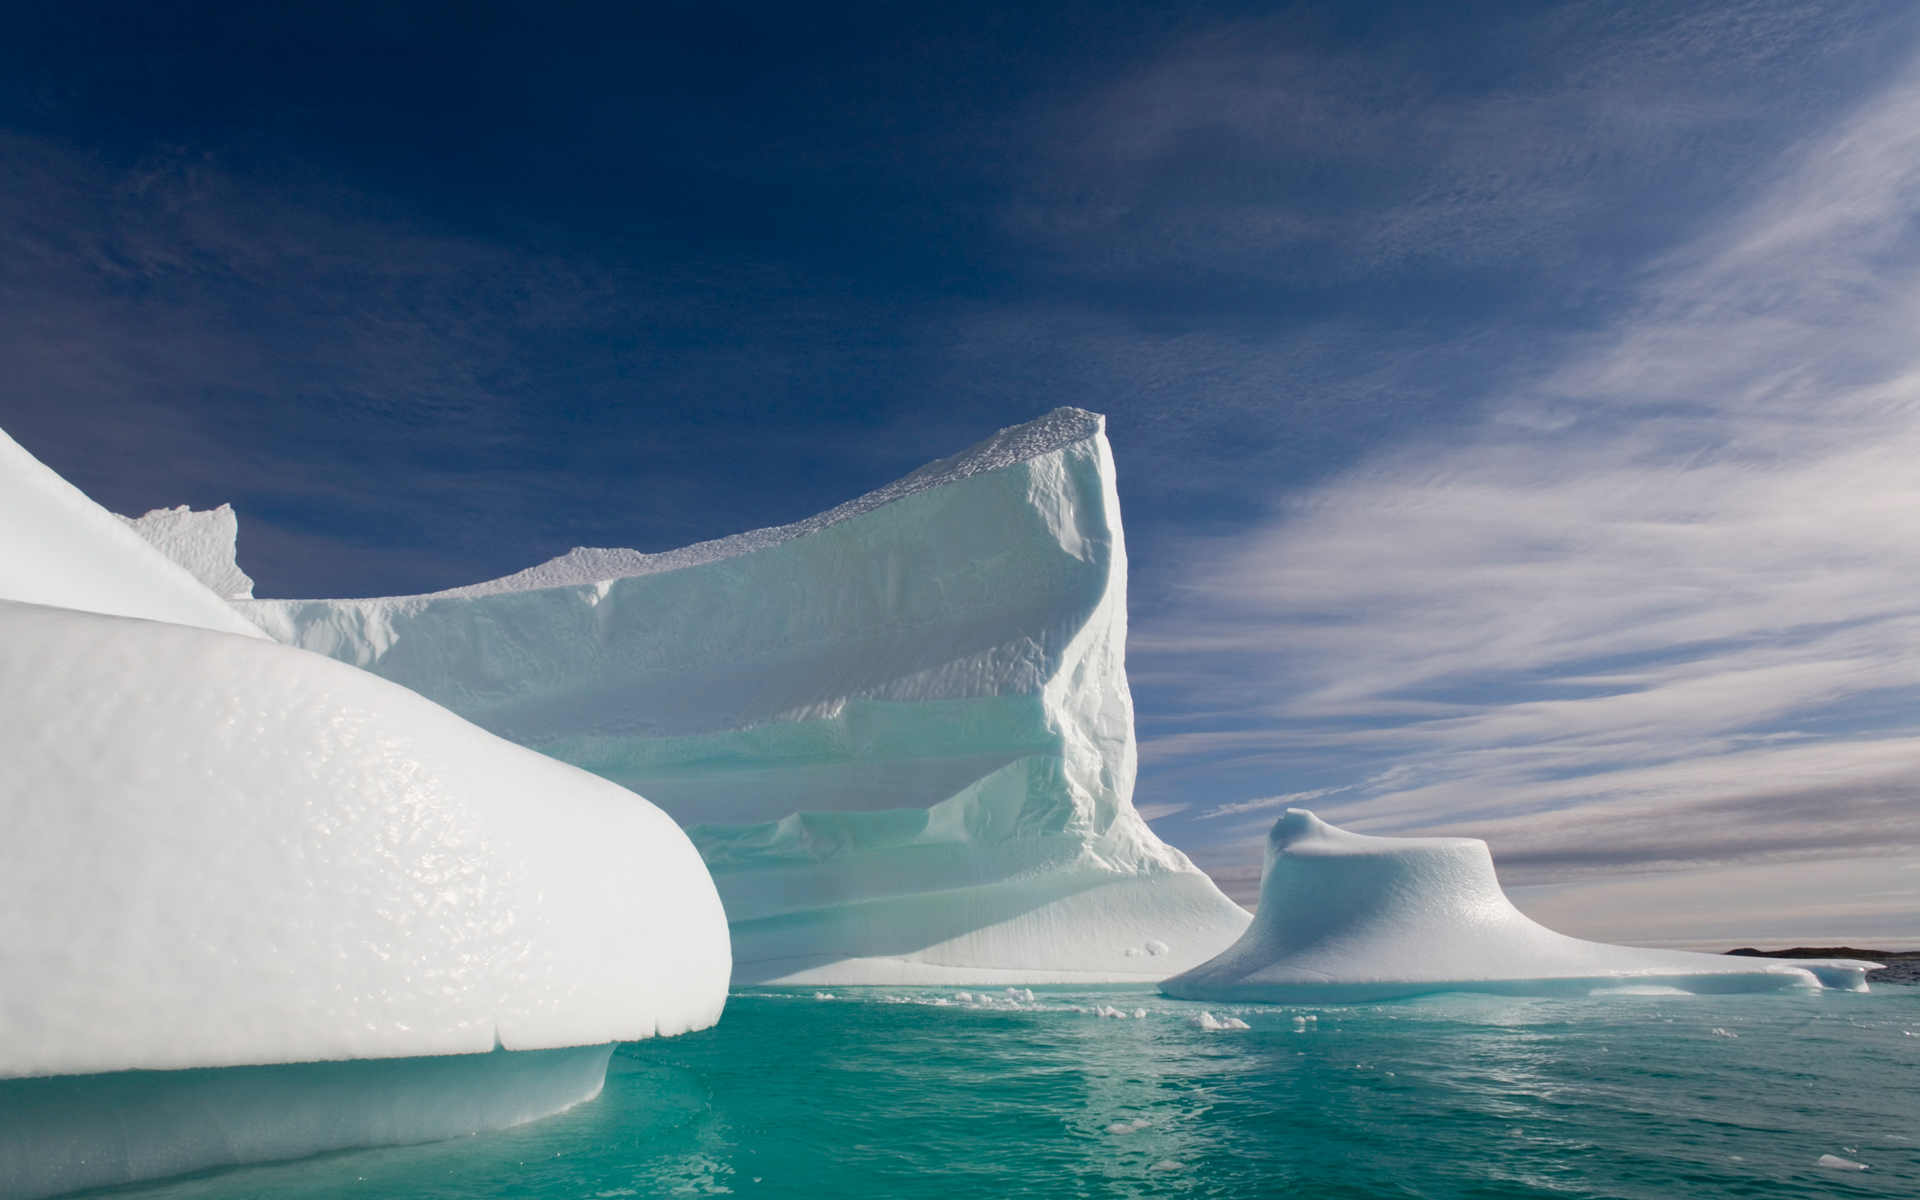 166671 descargar imagen tierra/naturaleza, iceberg: fondos de pantalla y protectores de pantalla gratis